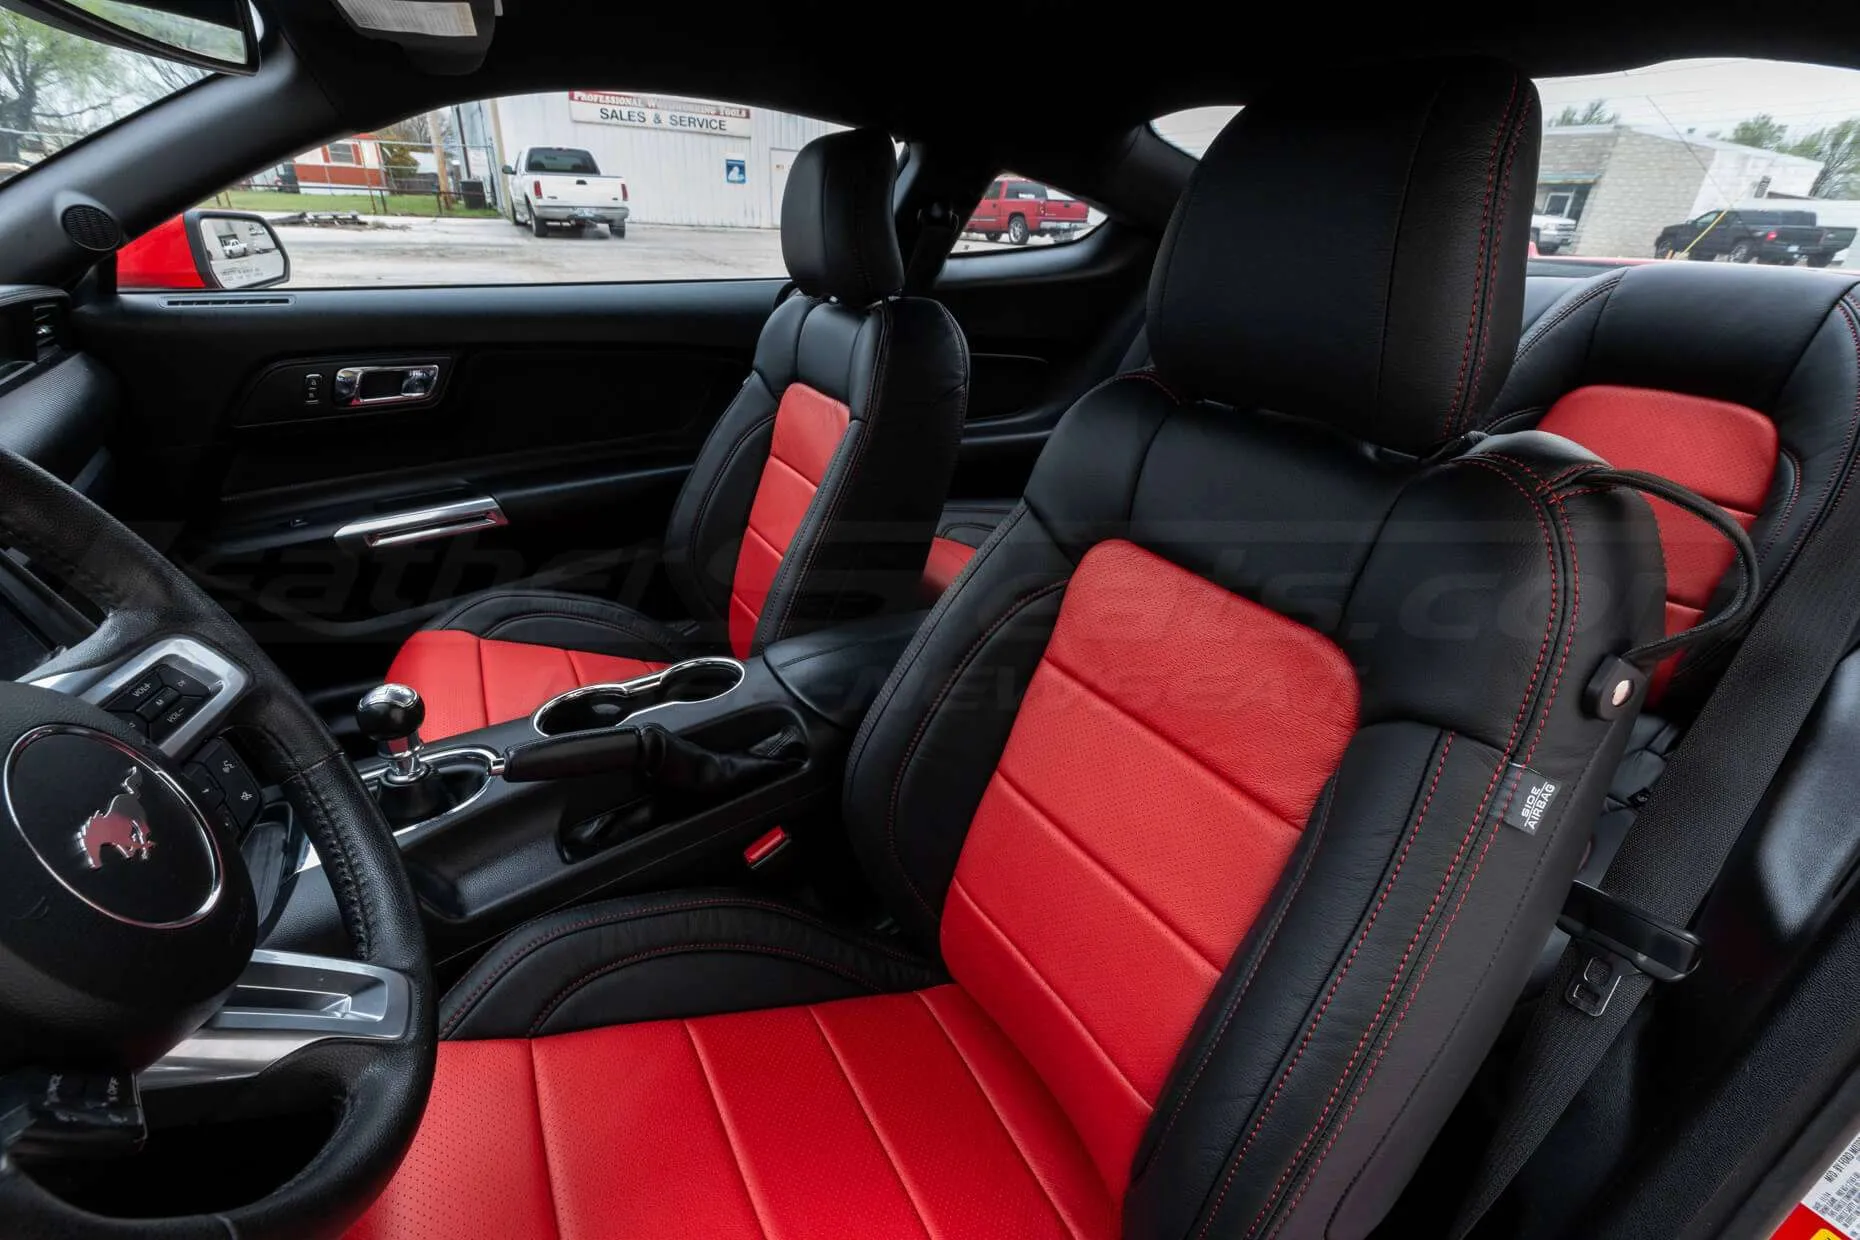 Ford Mustang installed leather kit - Black & Bright Red - Driver side Backrest & Headrest